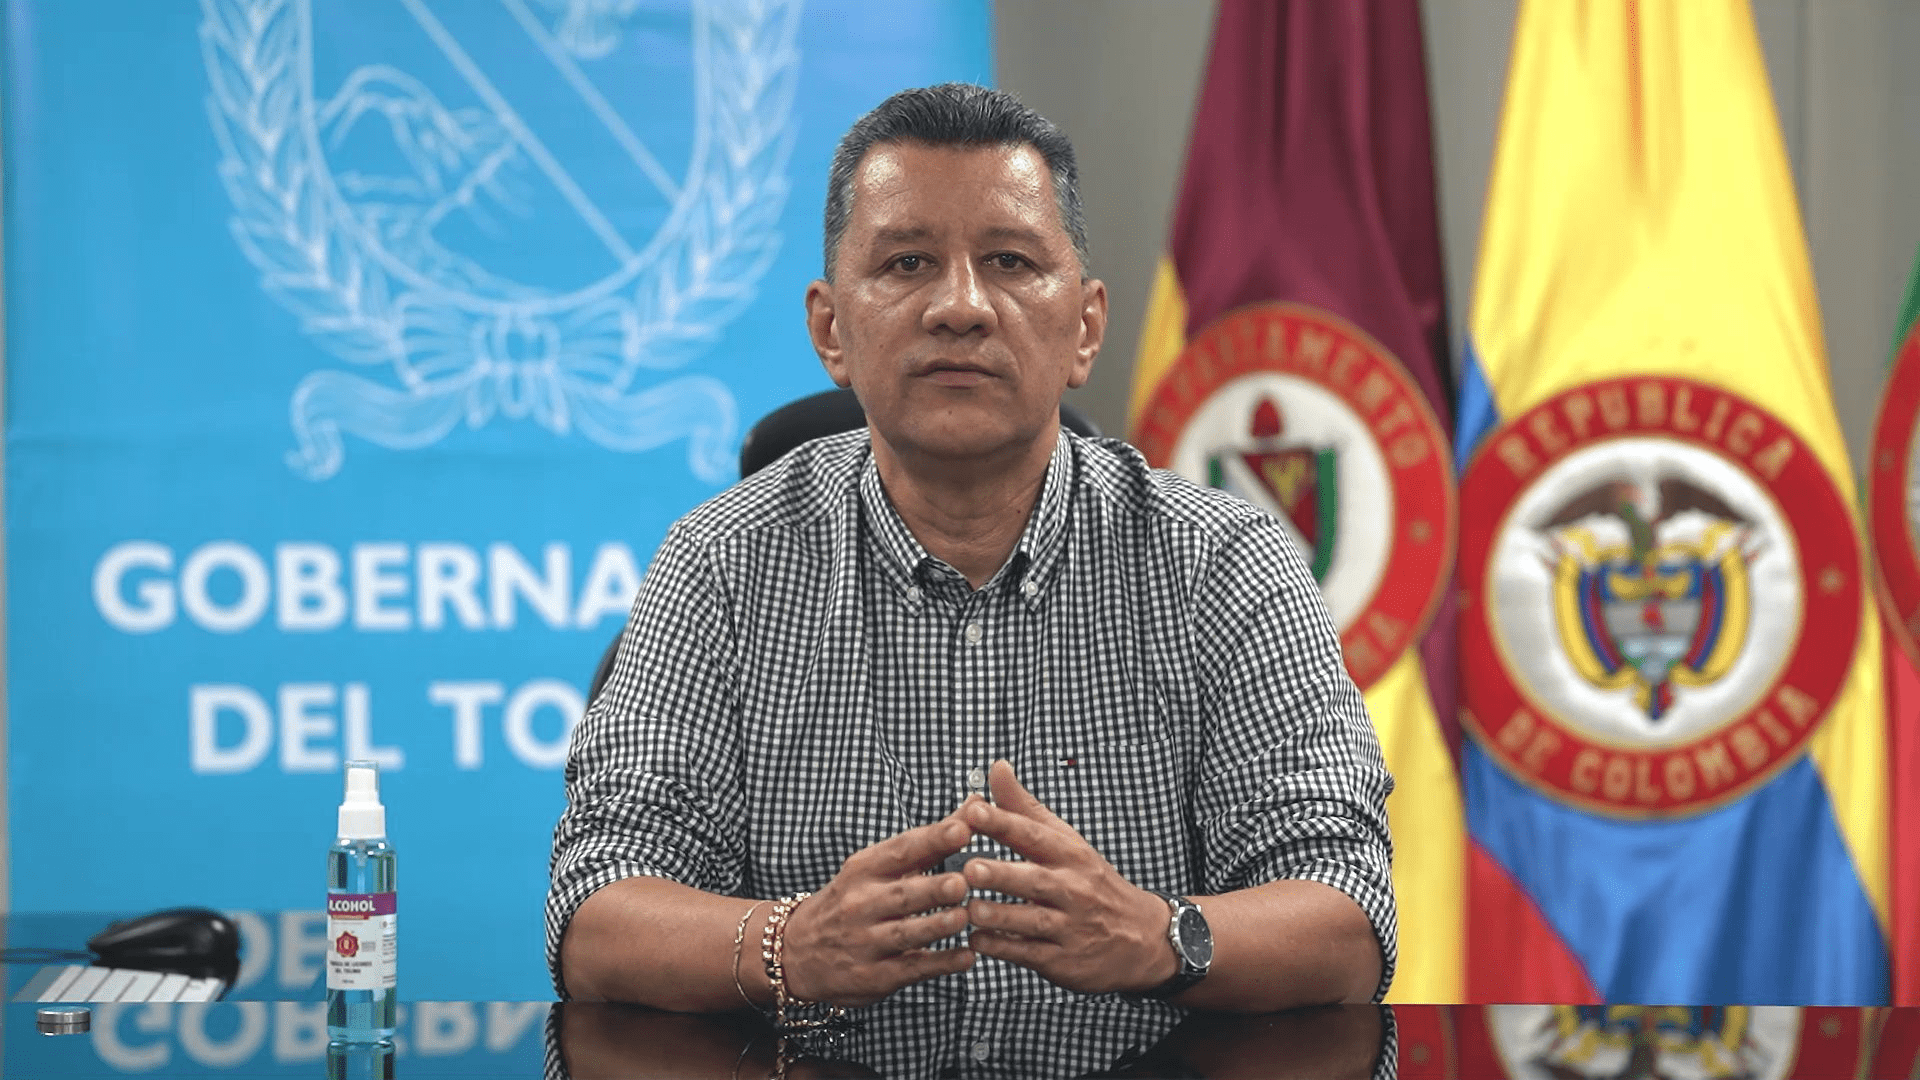 HUELGA DE HAMBRE: Insólita decisión de un Gobernador colombiano